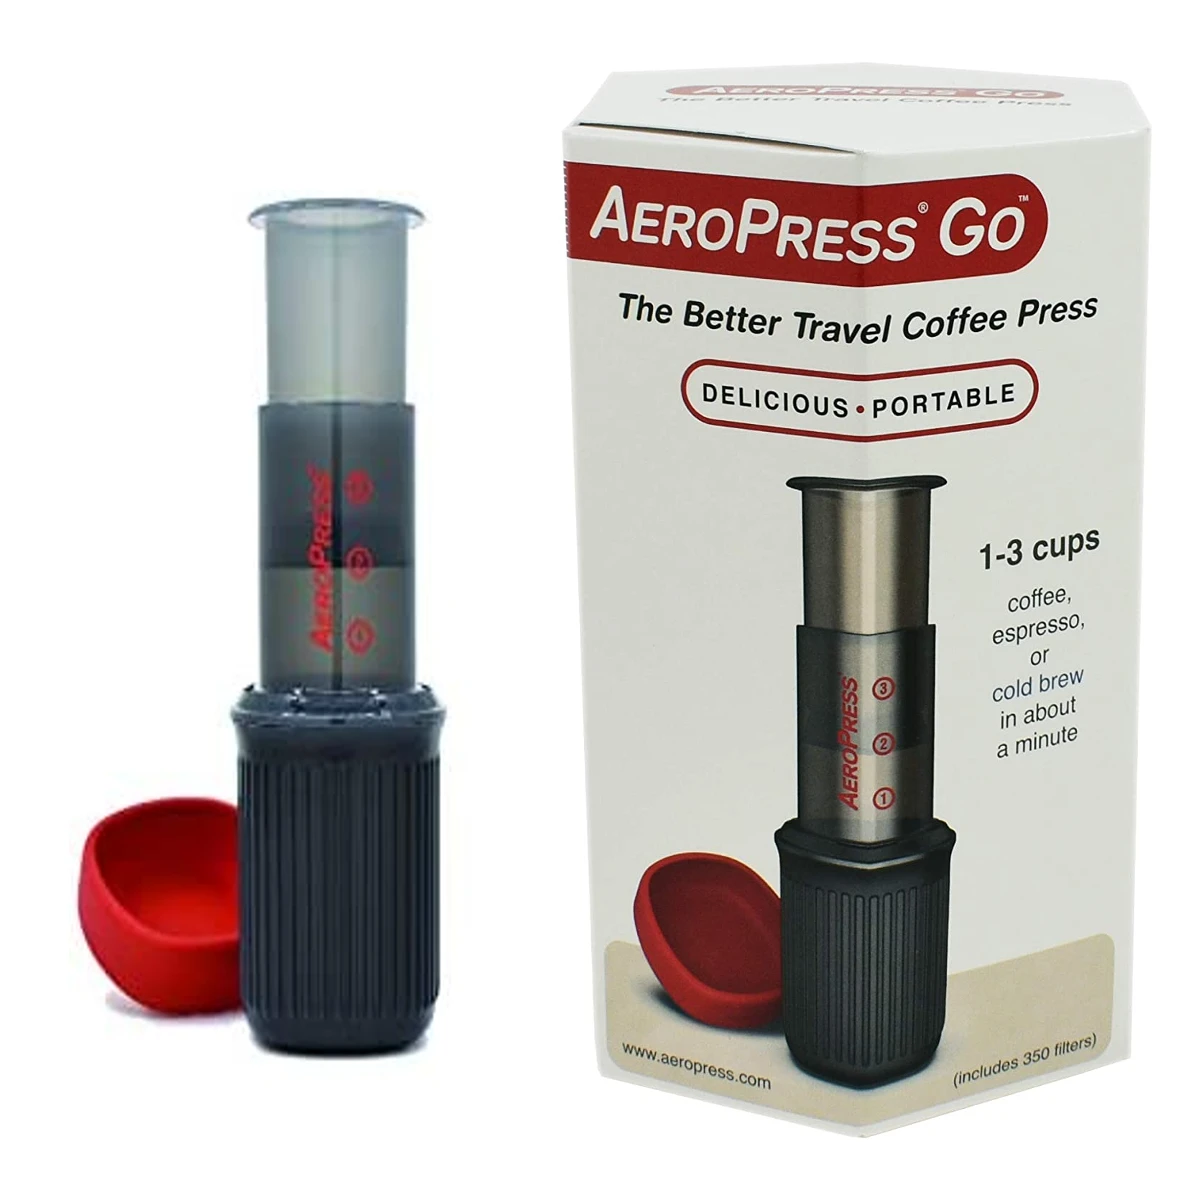 AeroPress Go Portable Travel Coffee Press